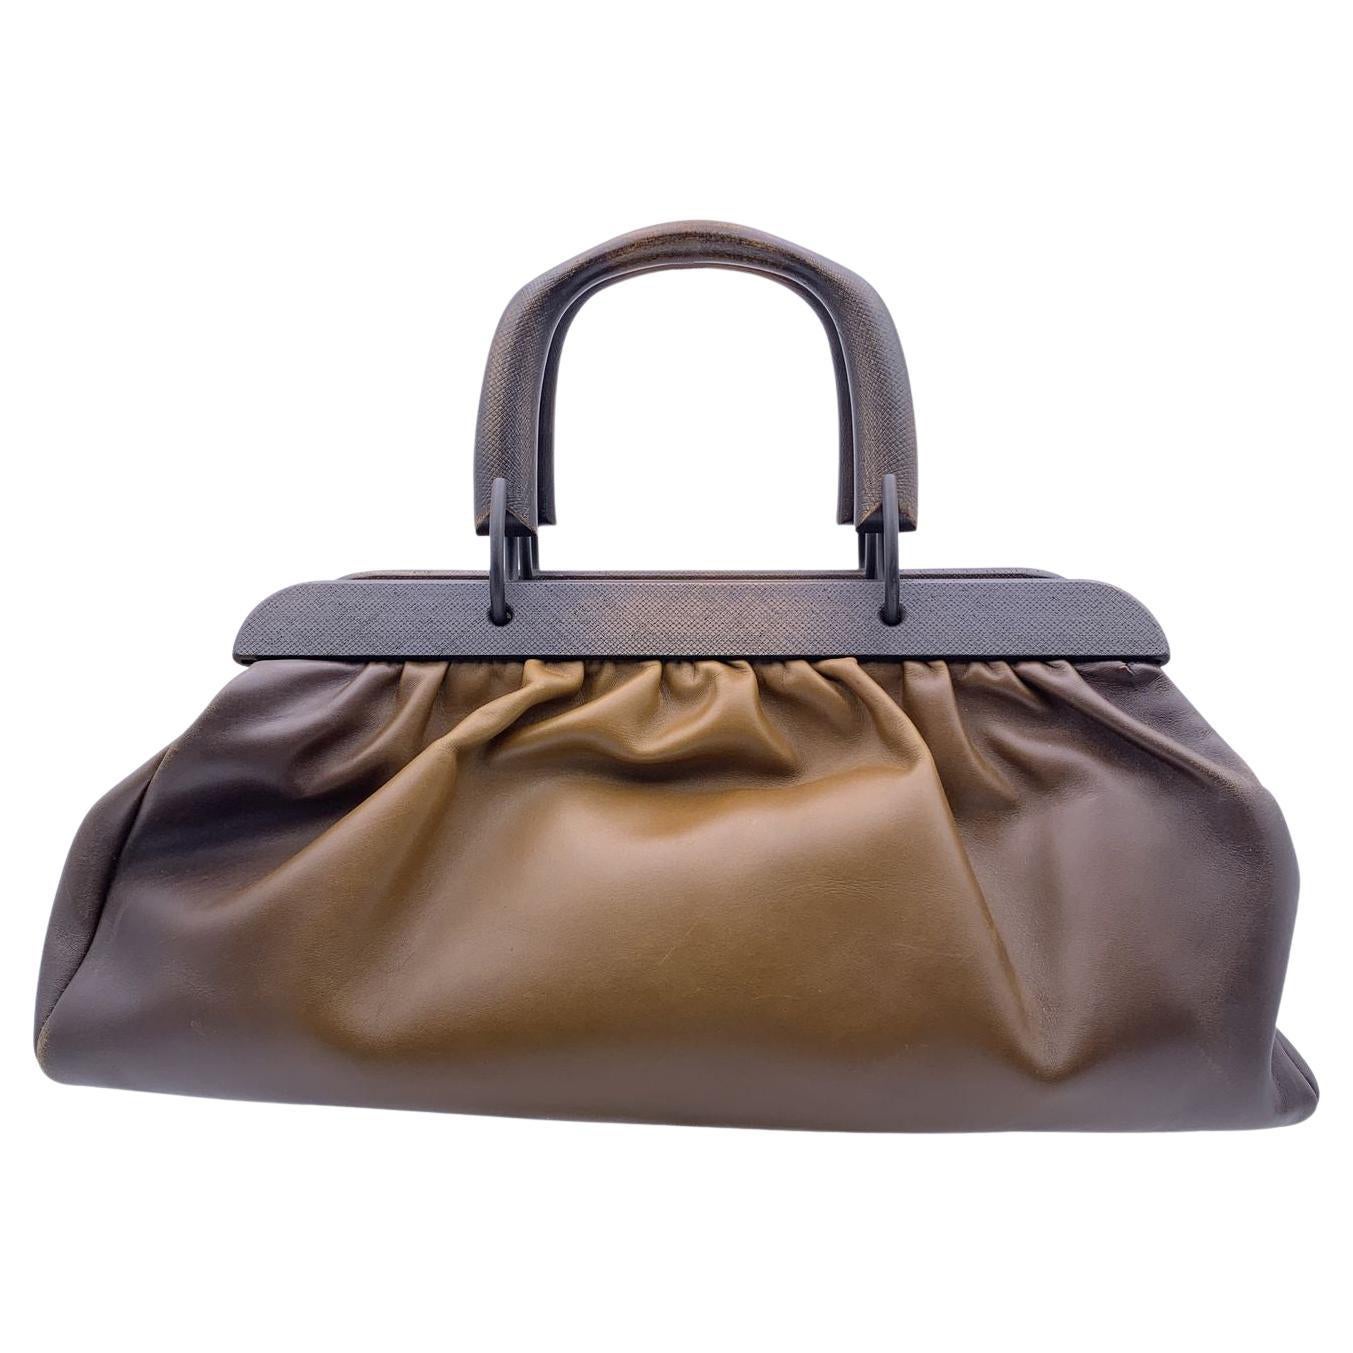 Gucci Brown Leather Wood Handles Bag Handbag Satchel For Sale